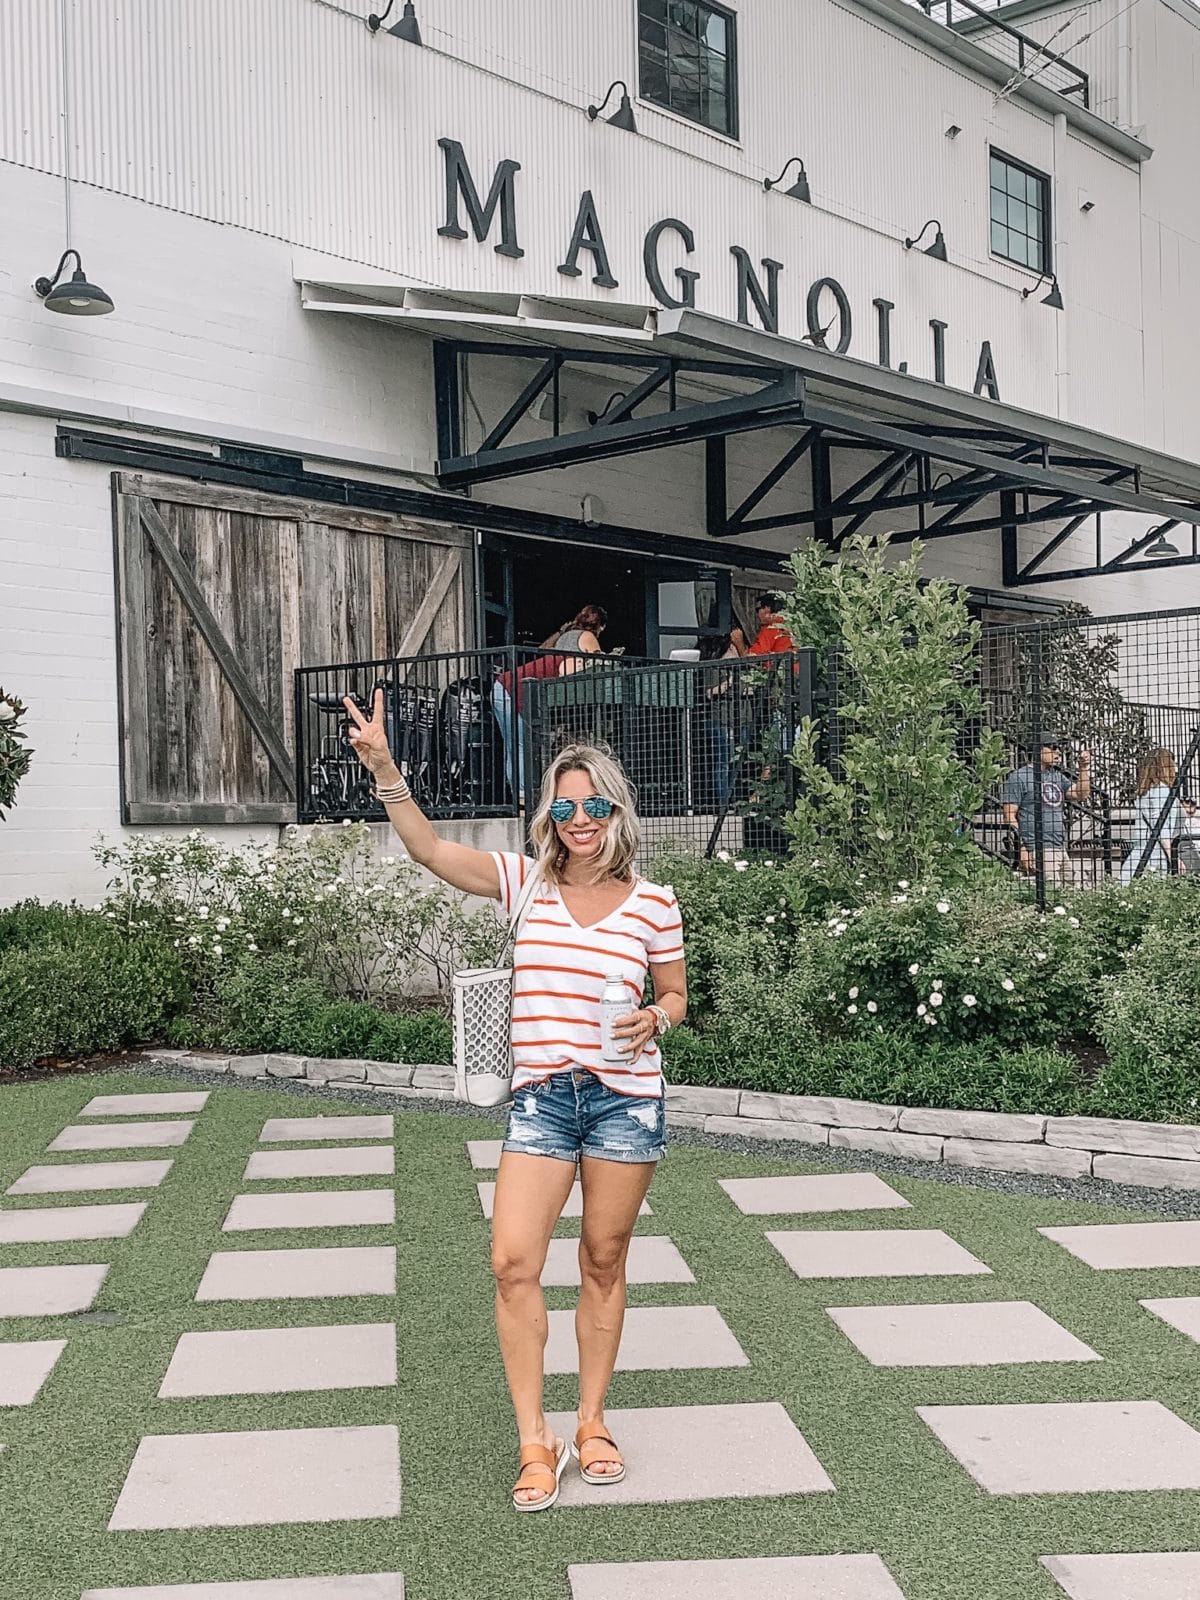 Guide to Magnolia Market in Waco, Texas